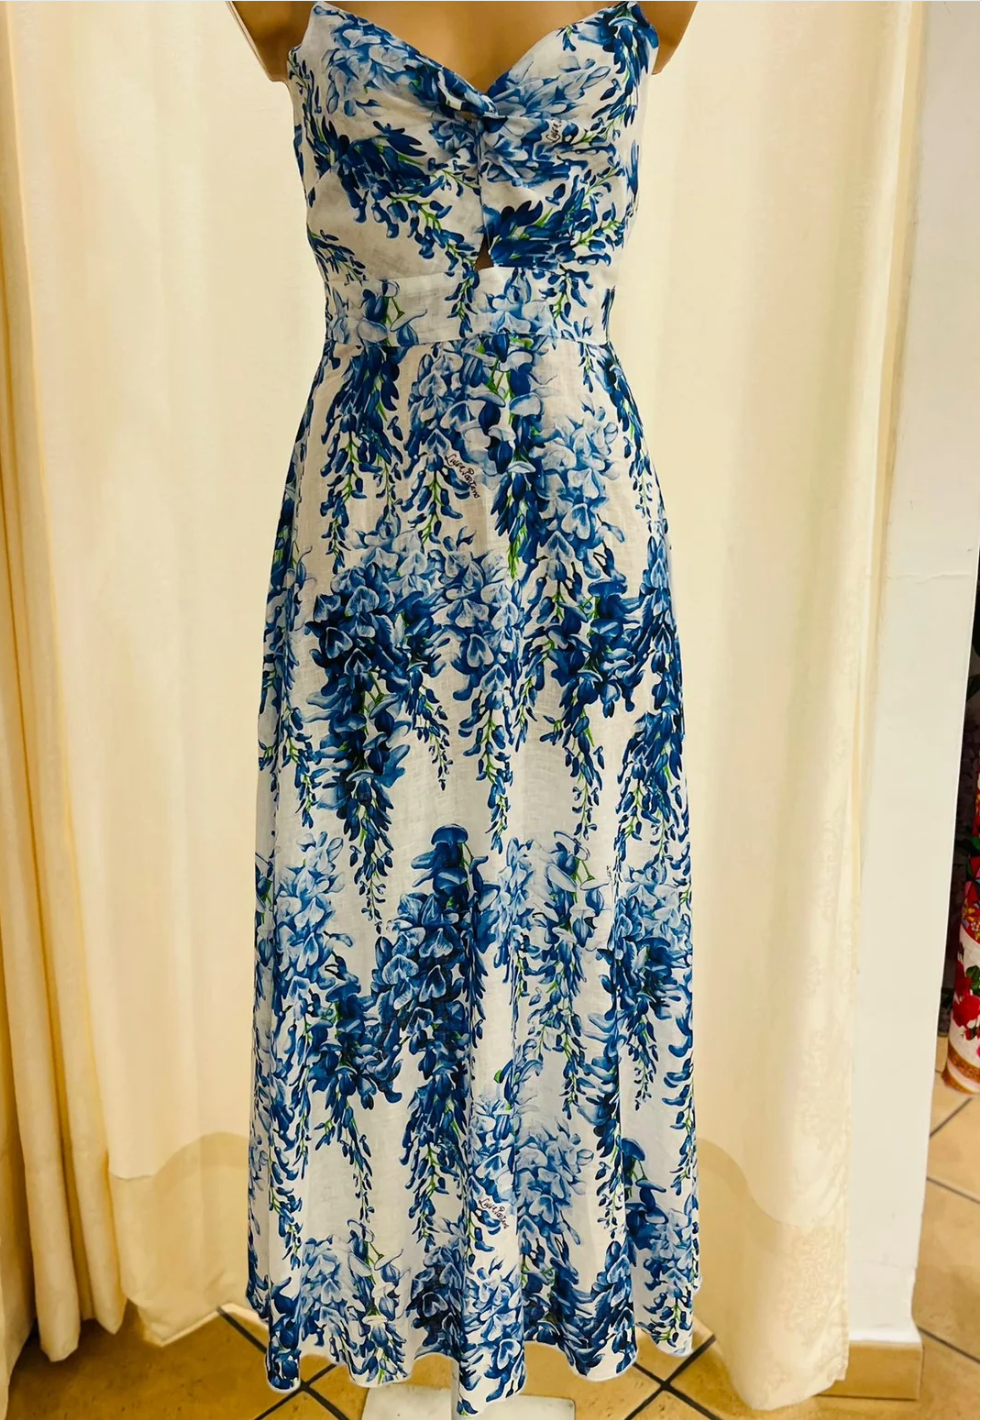 Positano Dress Petalo - Premium  from Marina St Barth - Just $530.00! Shop now at Marina St Barth